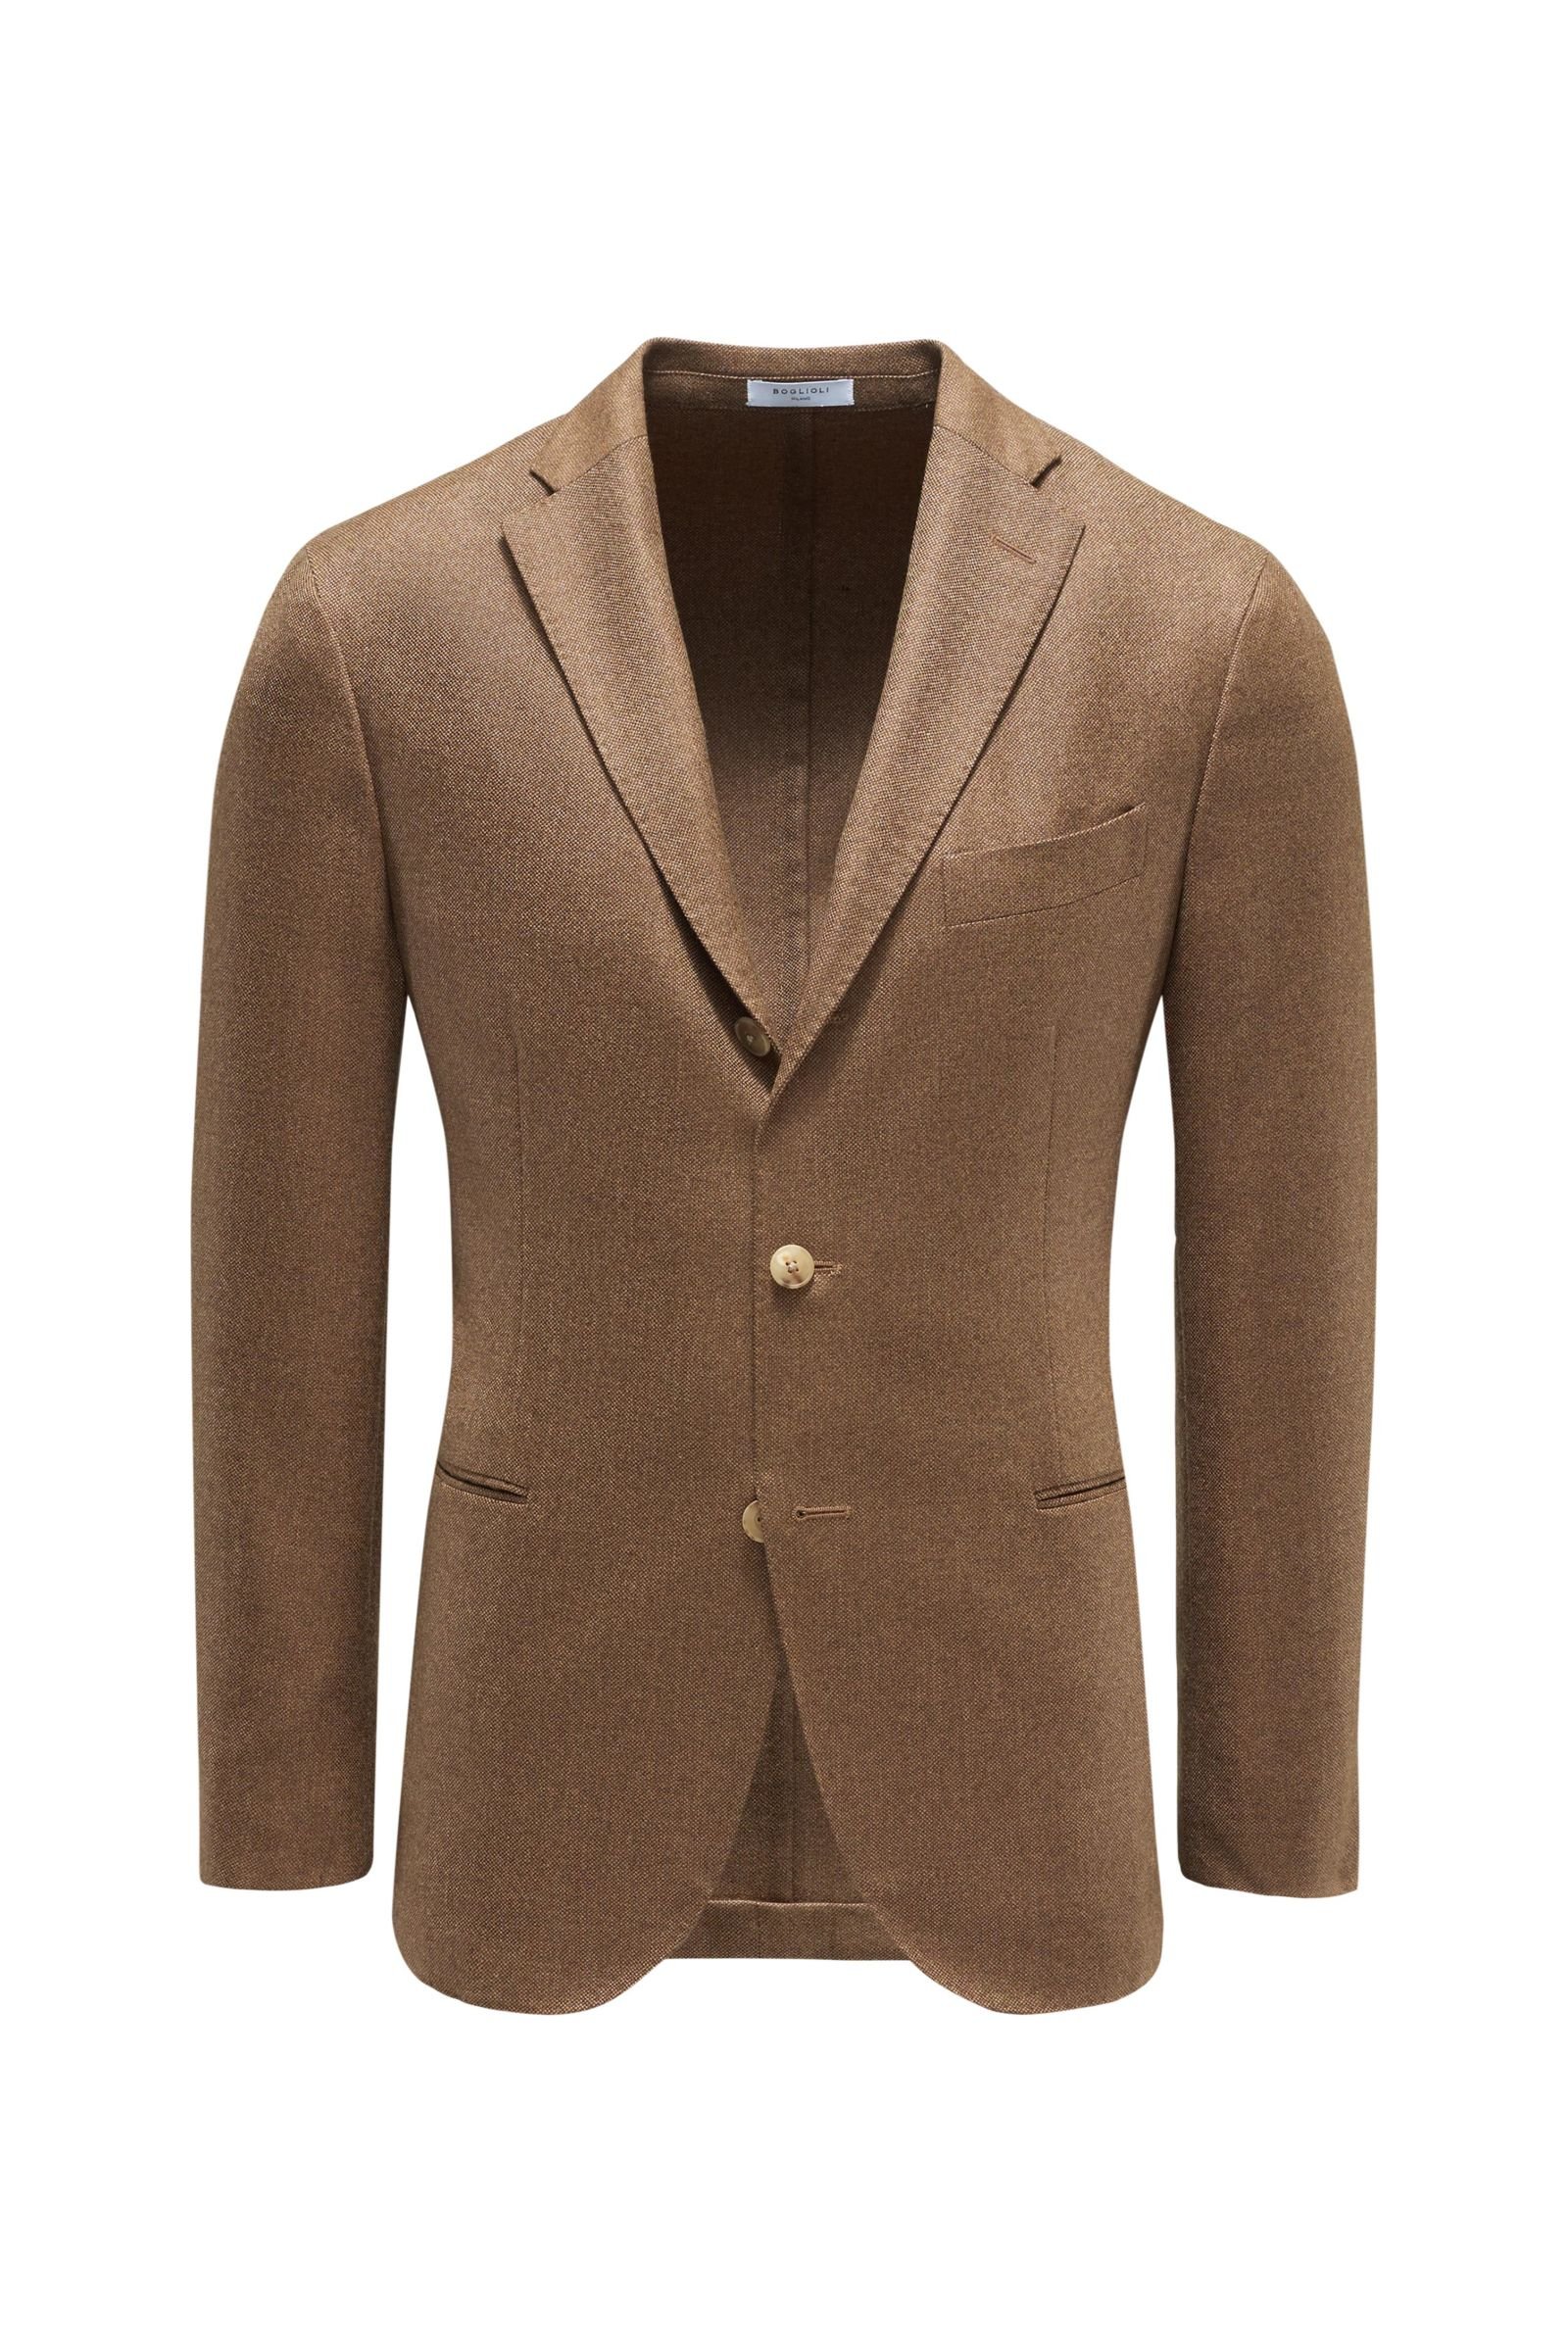 Smart-casual jacket 'Linea' light brown